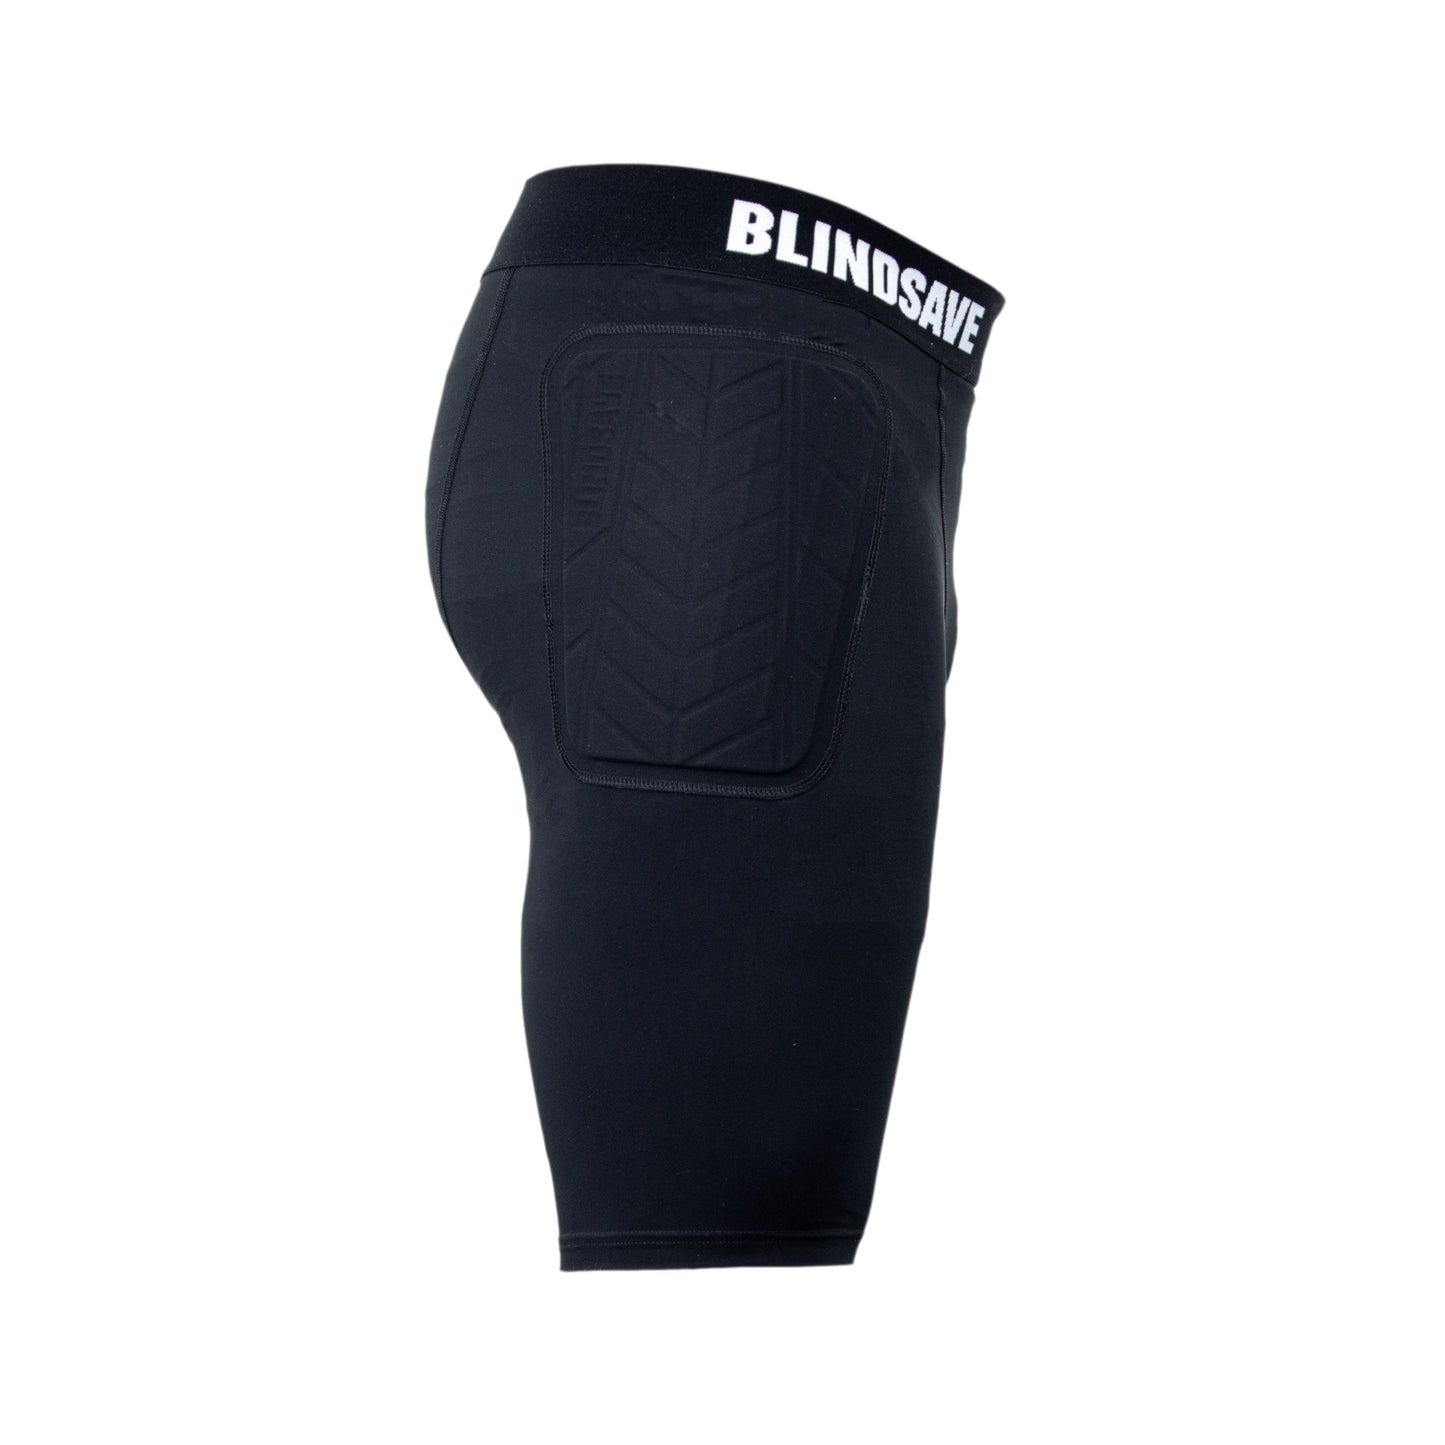 Padded goalkeepers shorts  - "Markmanns" buxurnar